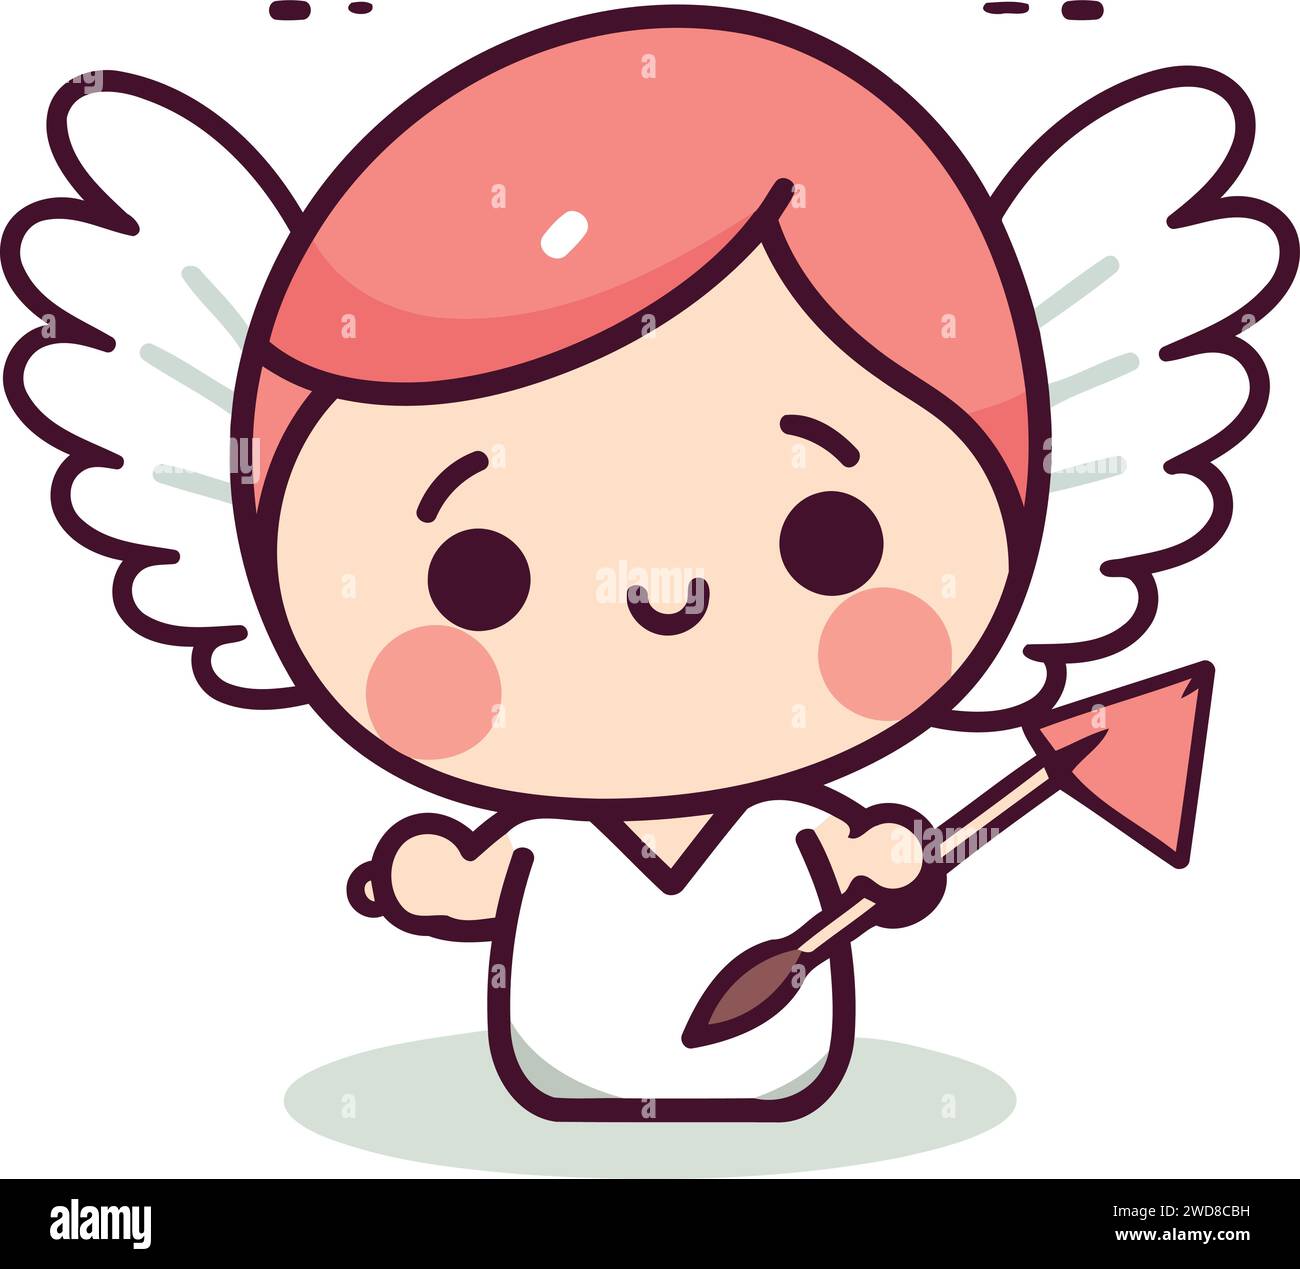 Cupidon Cute Angel Cartoon Illustration vectorielle Illustration de Vecteur